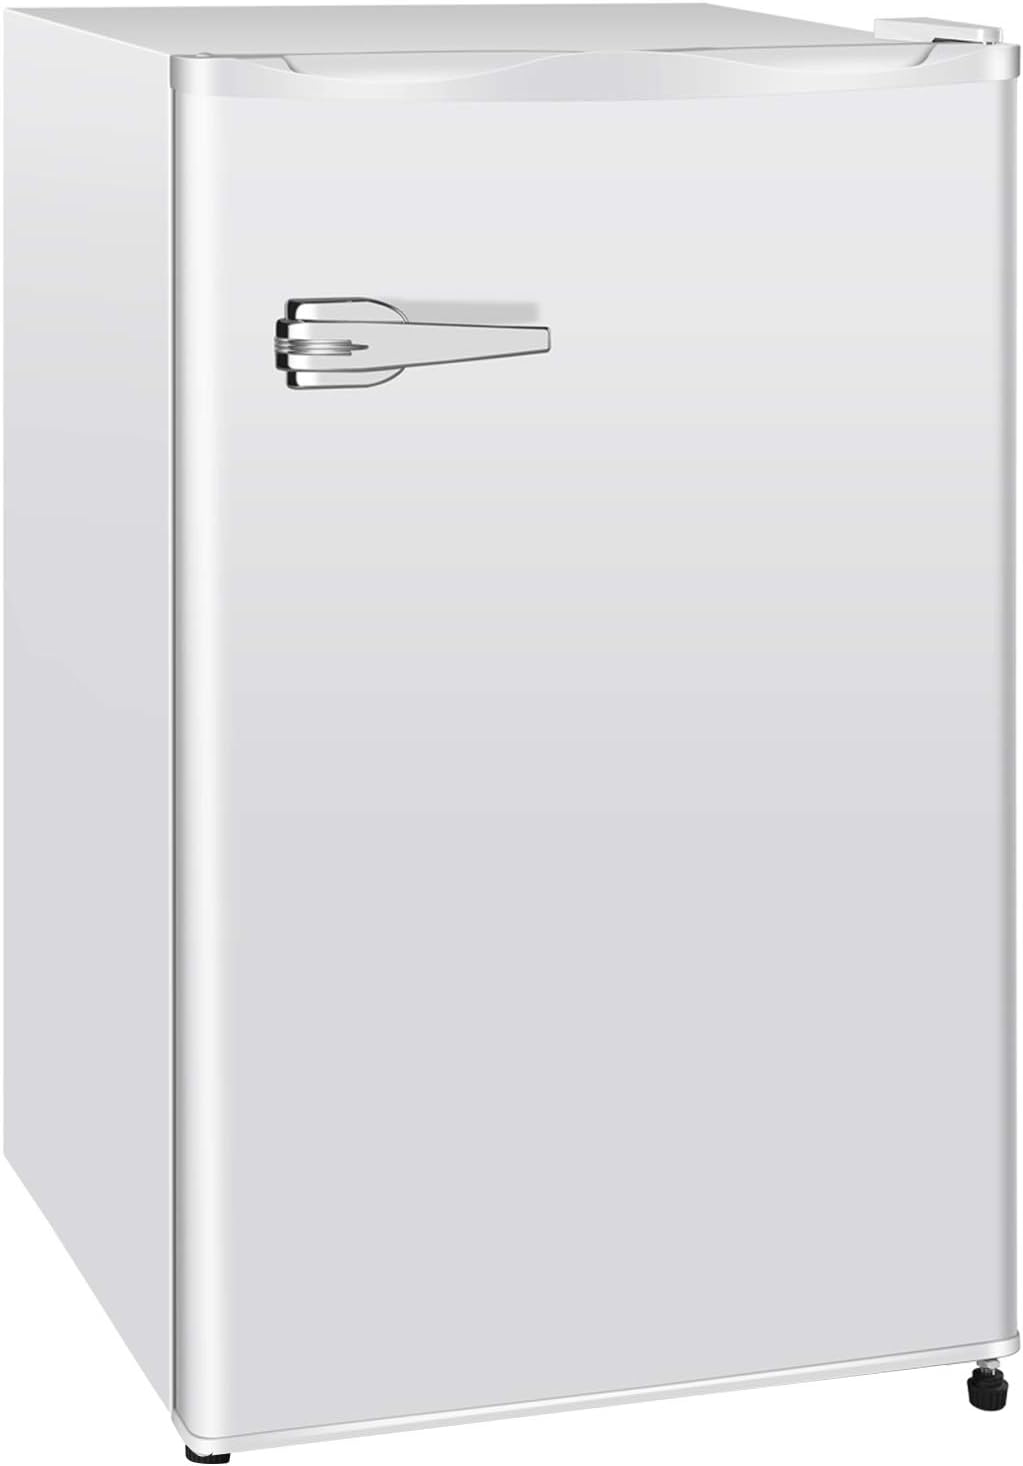 R.W.FLAME Mini Freezer Upright Freezer - 2.3 Cu.ft [...]